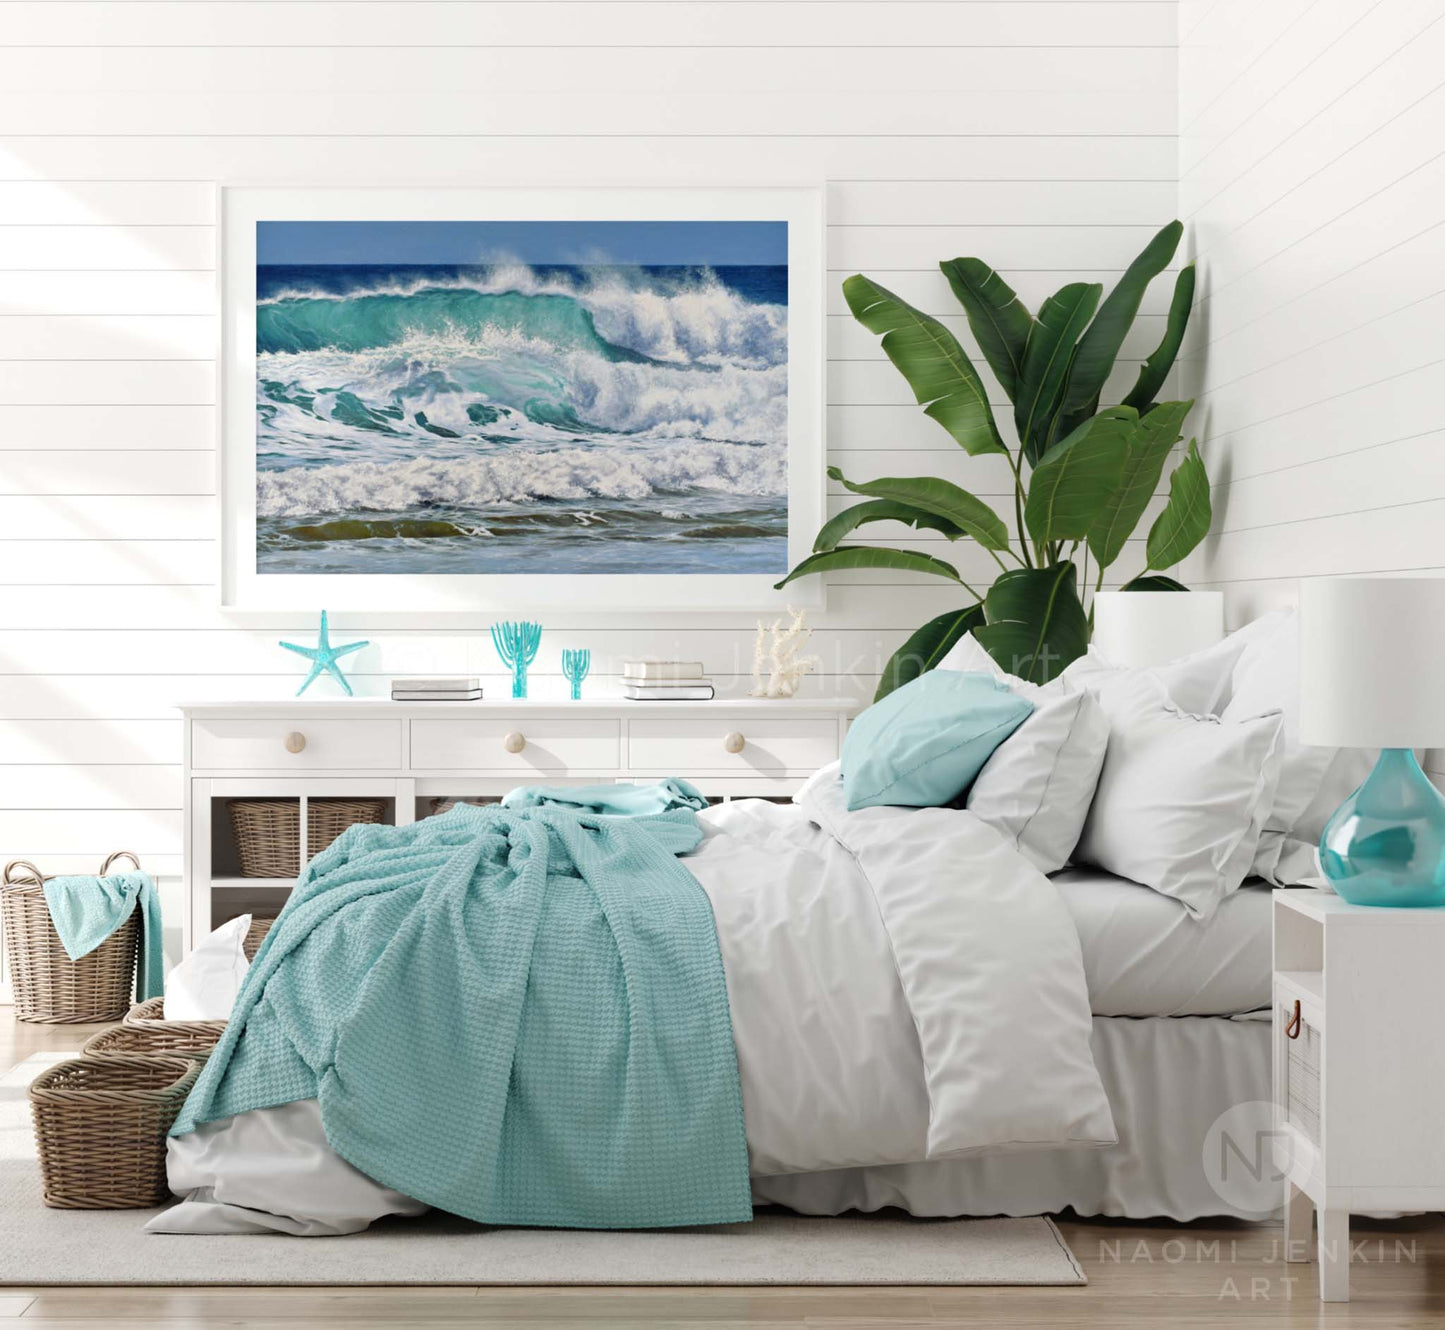 Framed wave art print by seascape artist Naomi Jenkin in a bedroom setting.